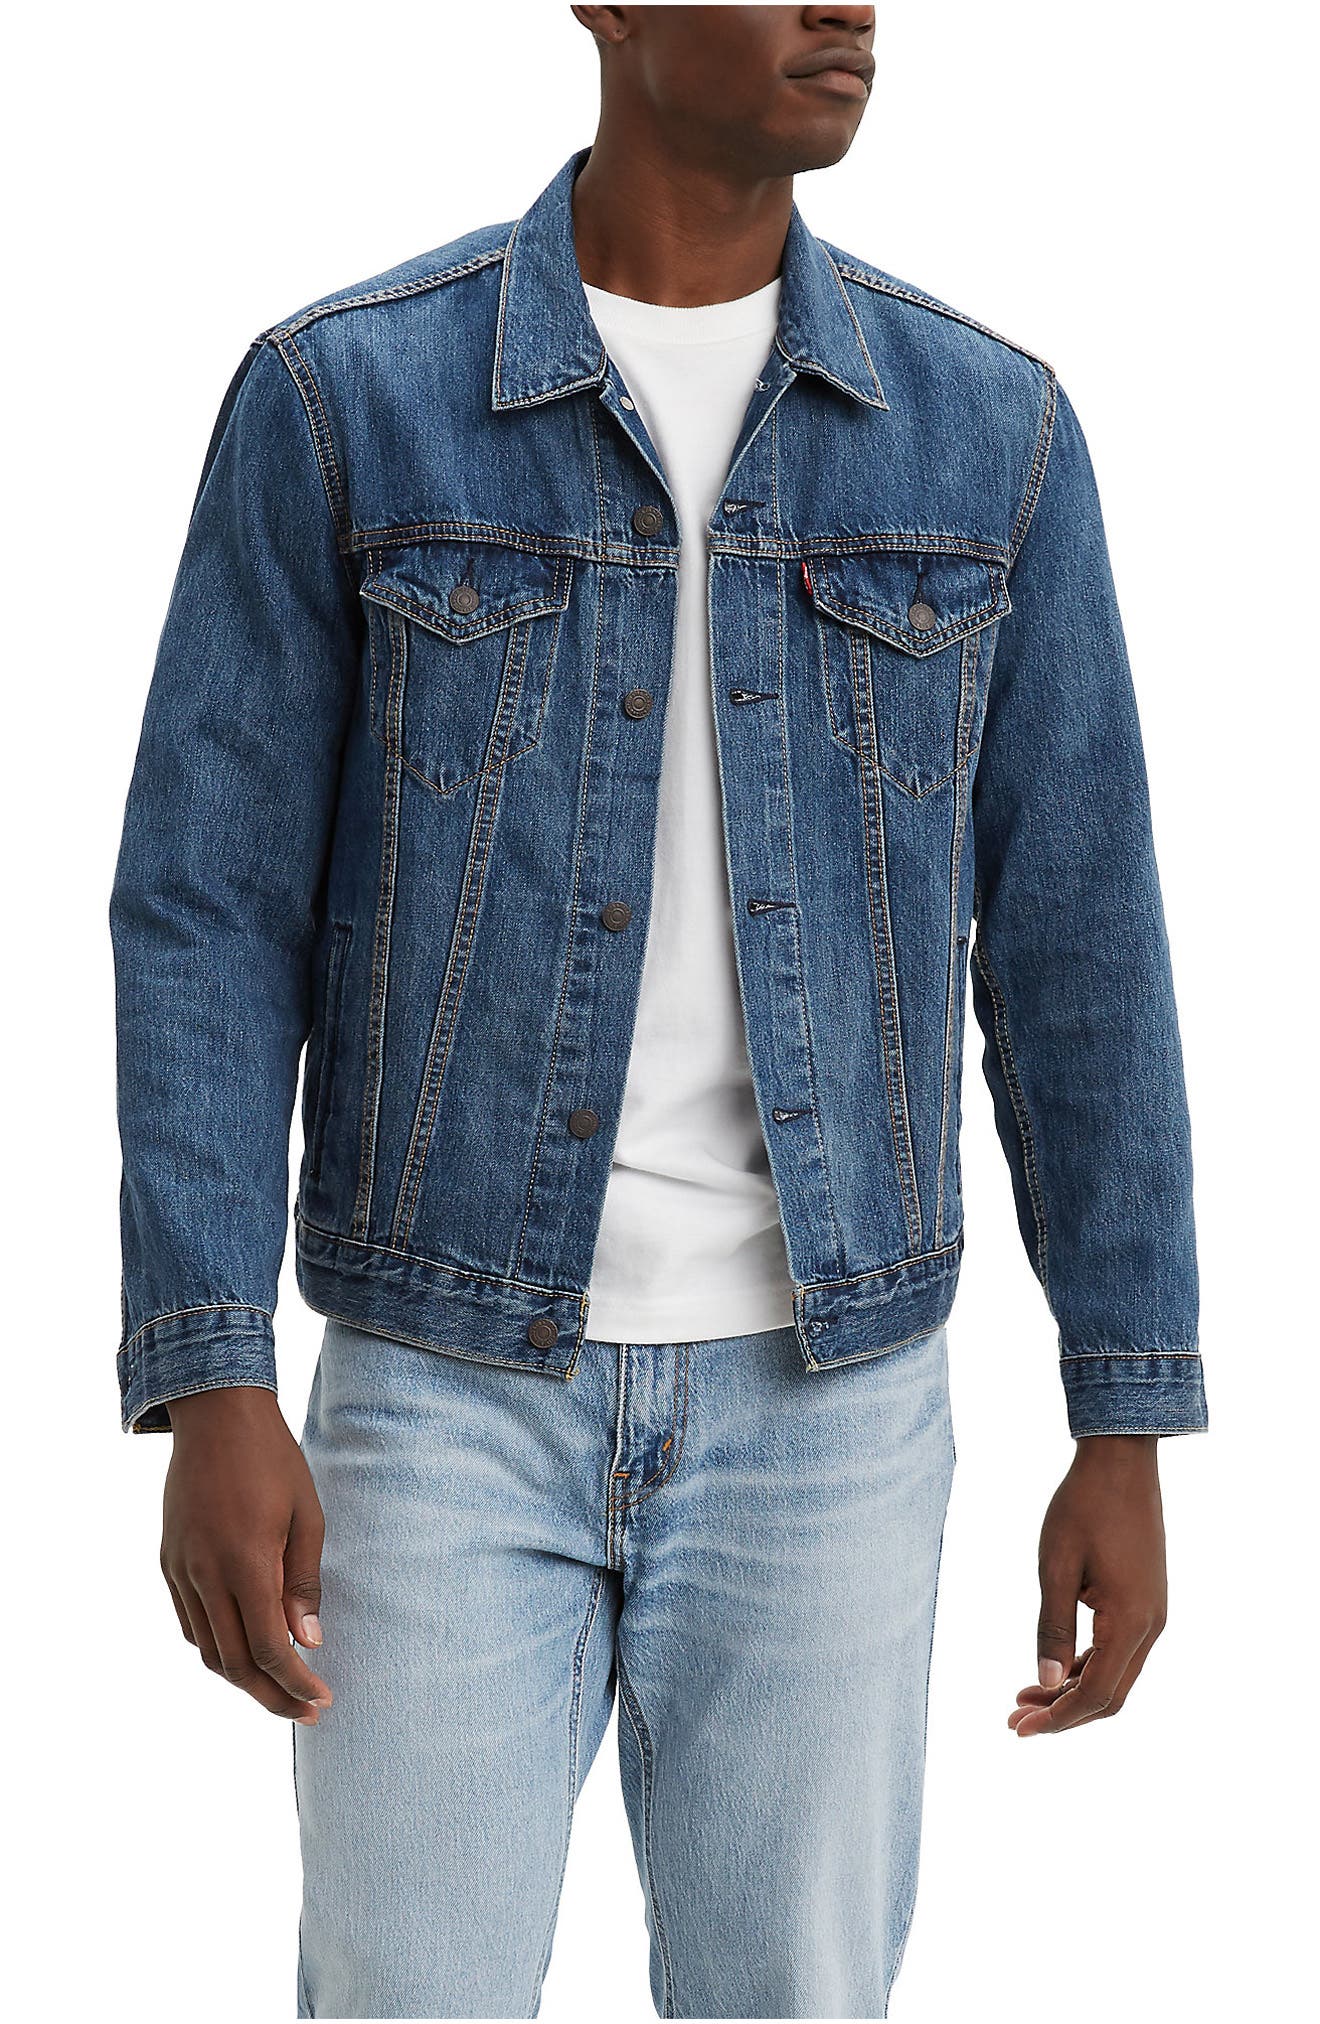 D555 Duke King Size Big Mens Denim Jacket Stone Wash Jean Jacket Outwear Coats